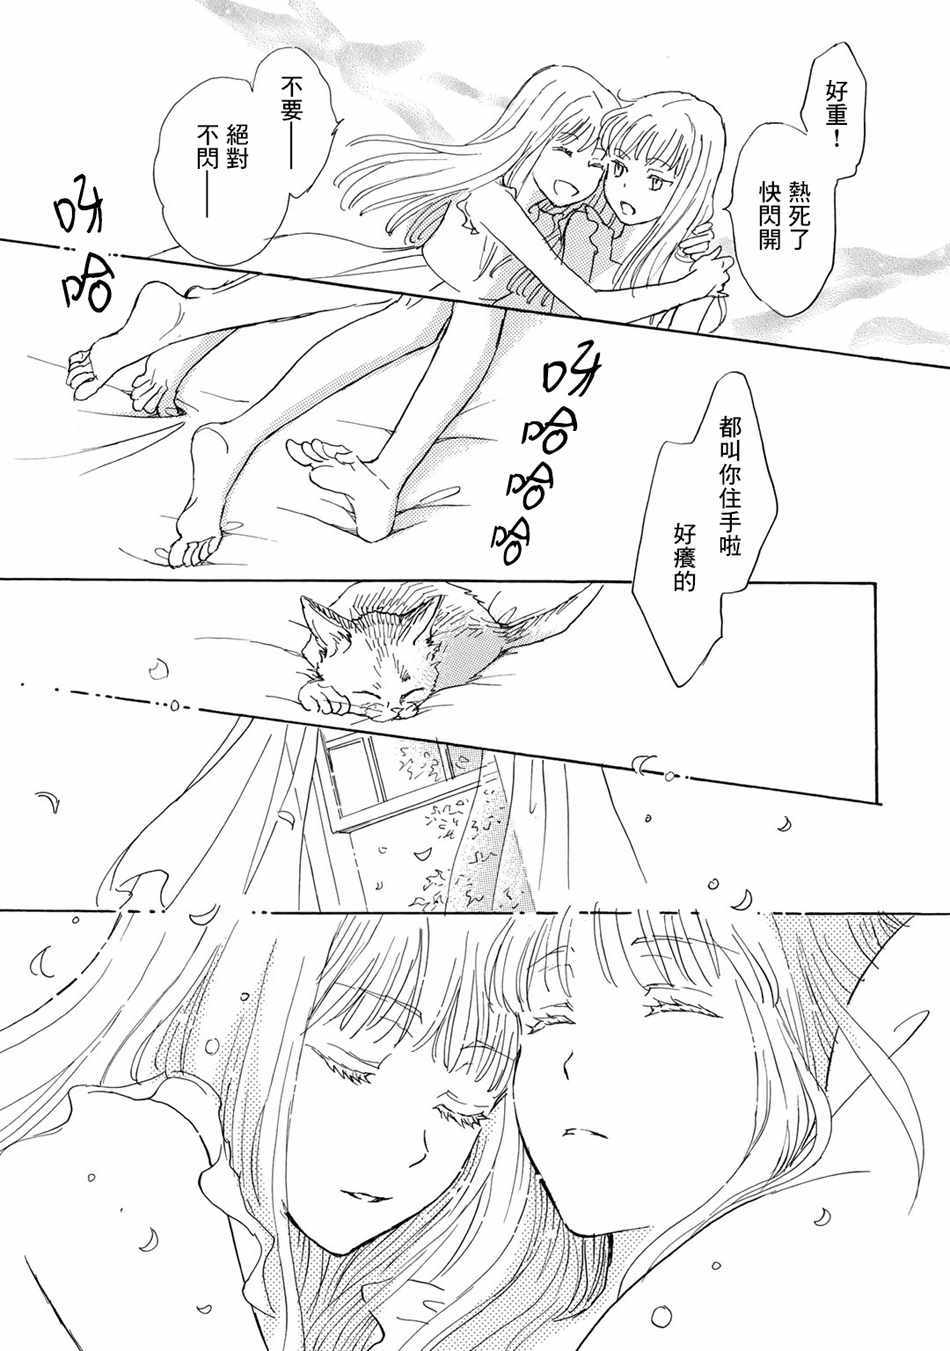 《Lily Lily rose》漫画 006集